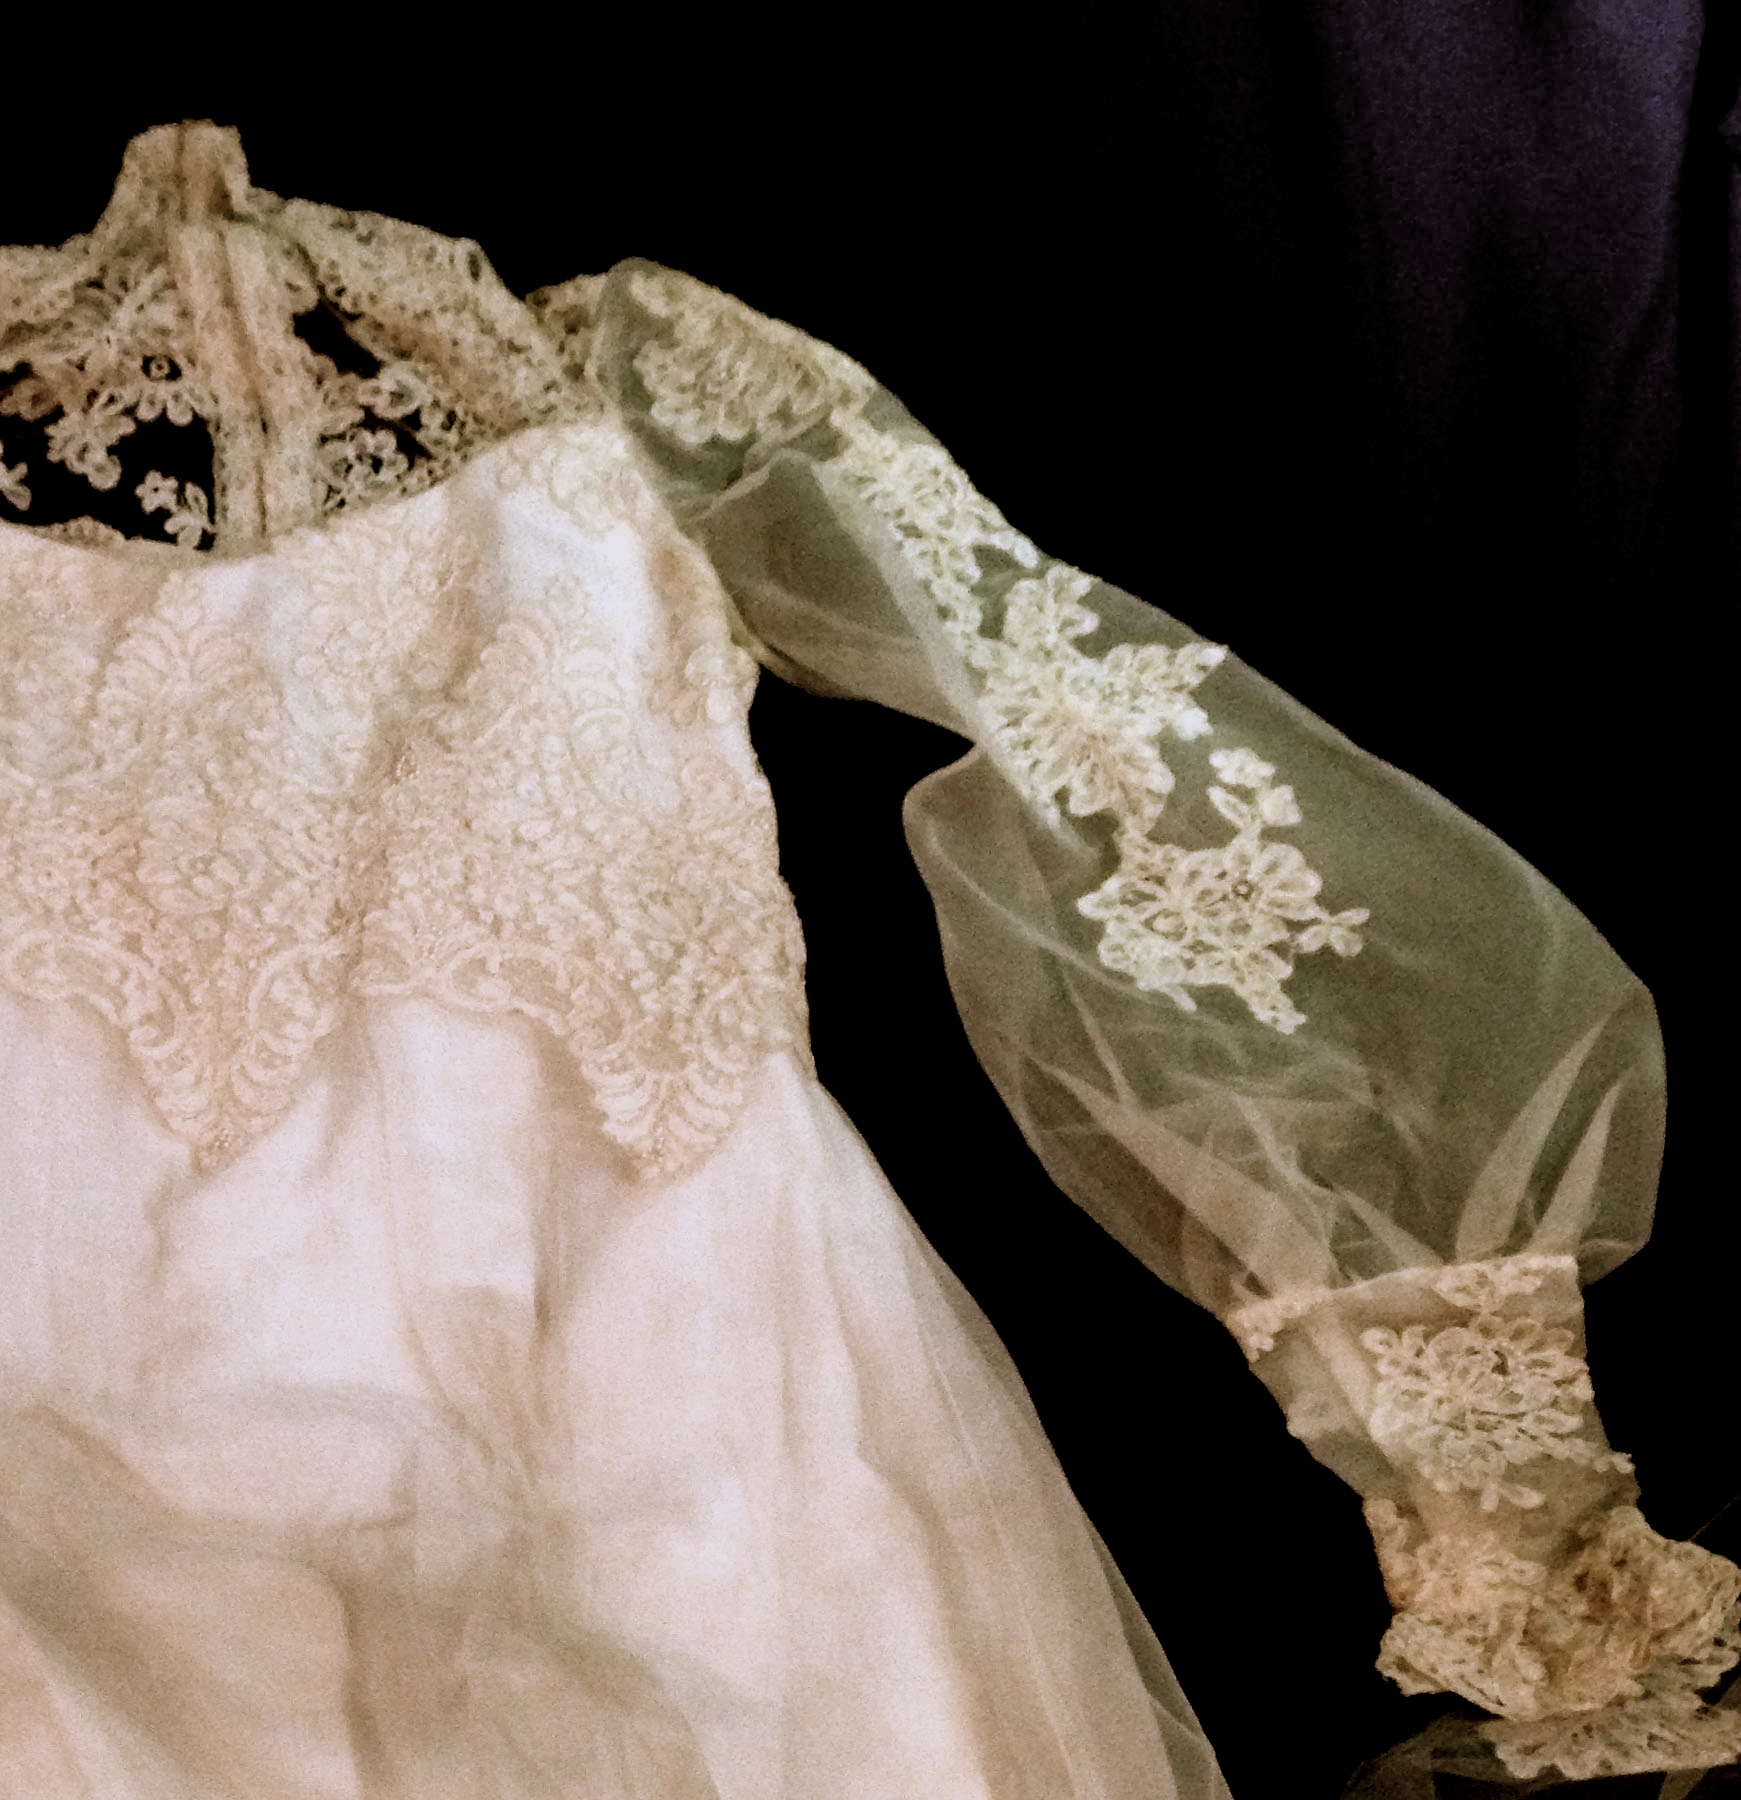 Mother of the Bride's original wedding gown